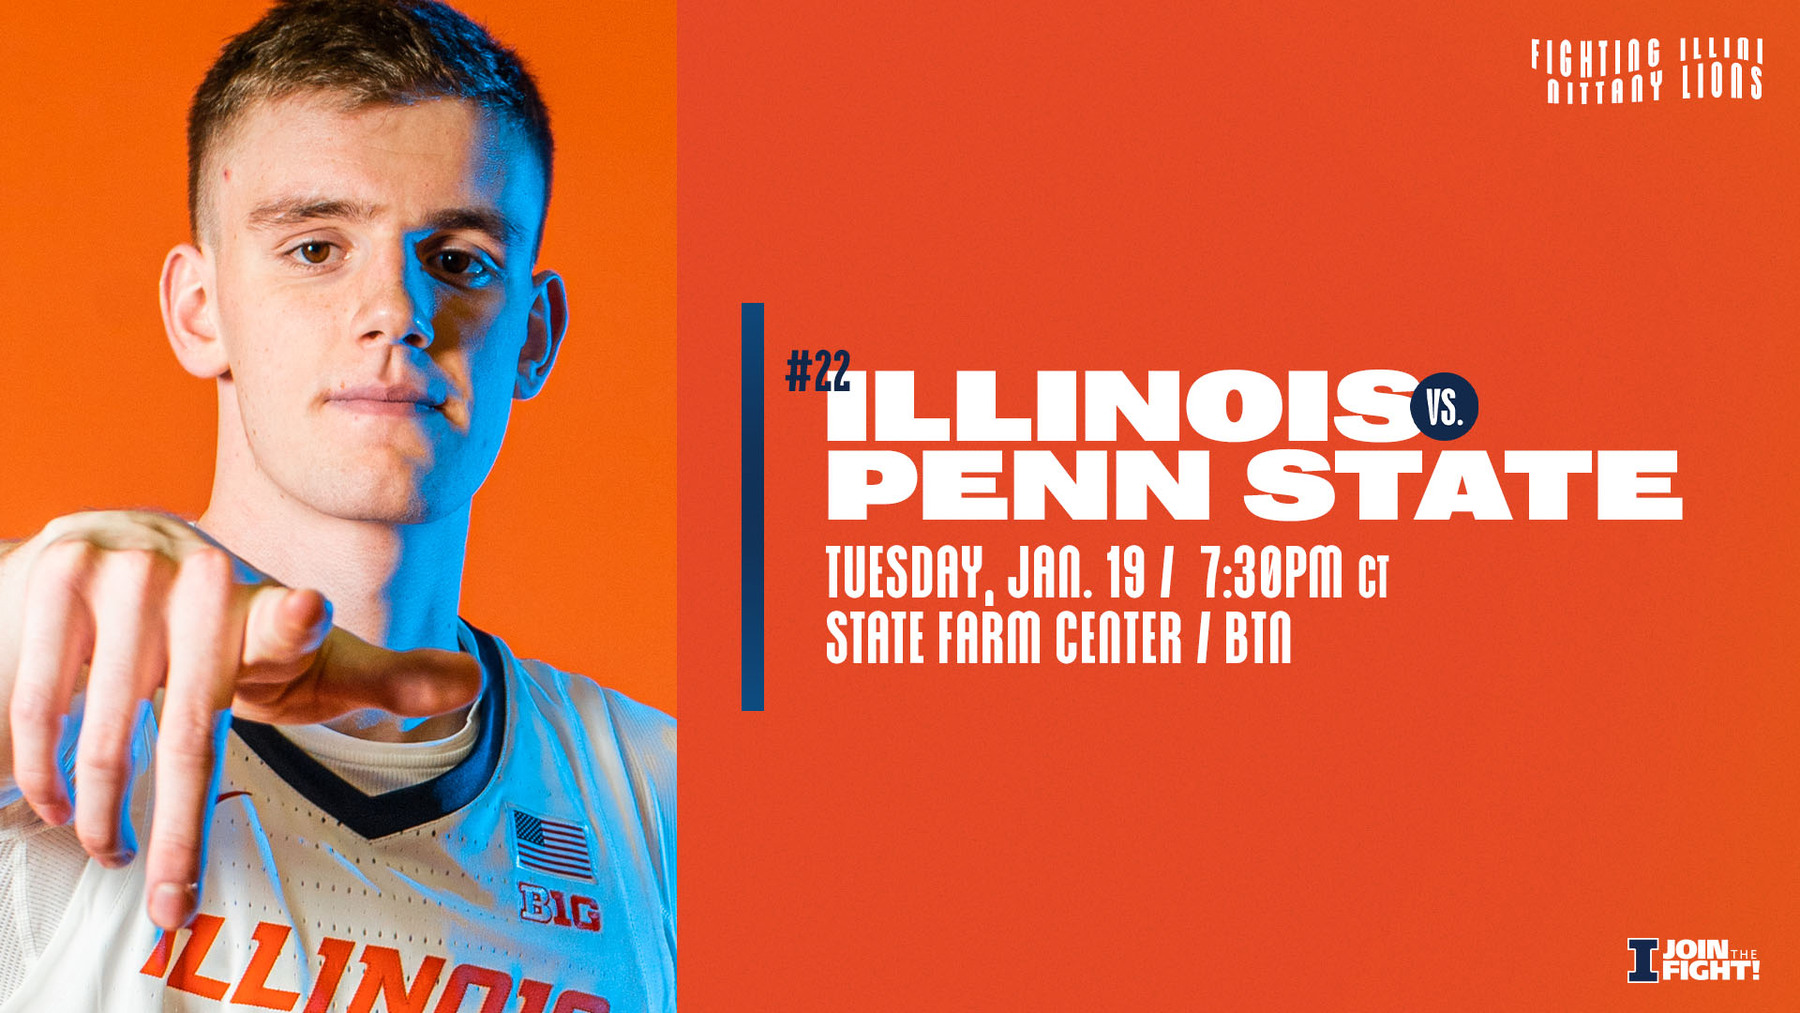 Illinois freshman center Brandon Lieb is featured on graphic promoting Illinois vs. Penn State